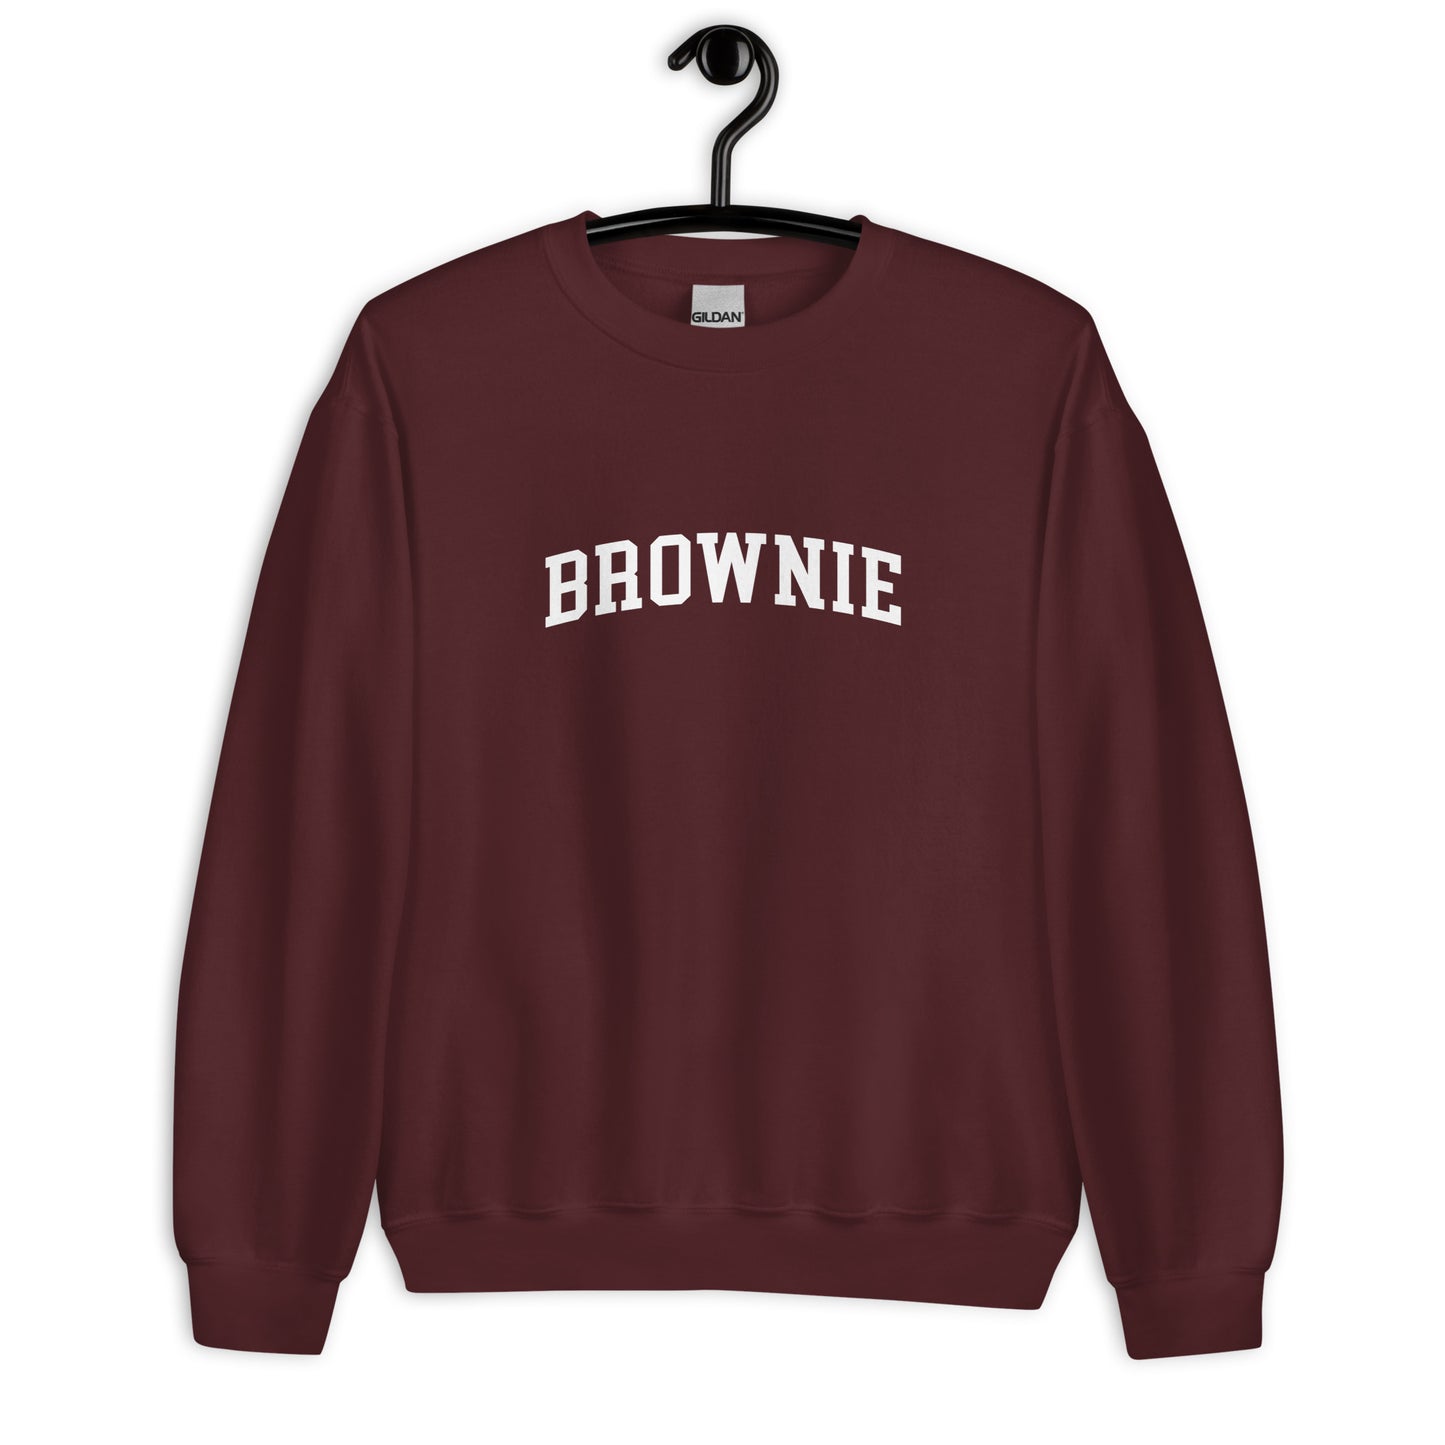 Brownie Sweatshirt - Arched Font